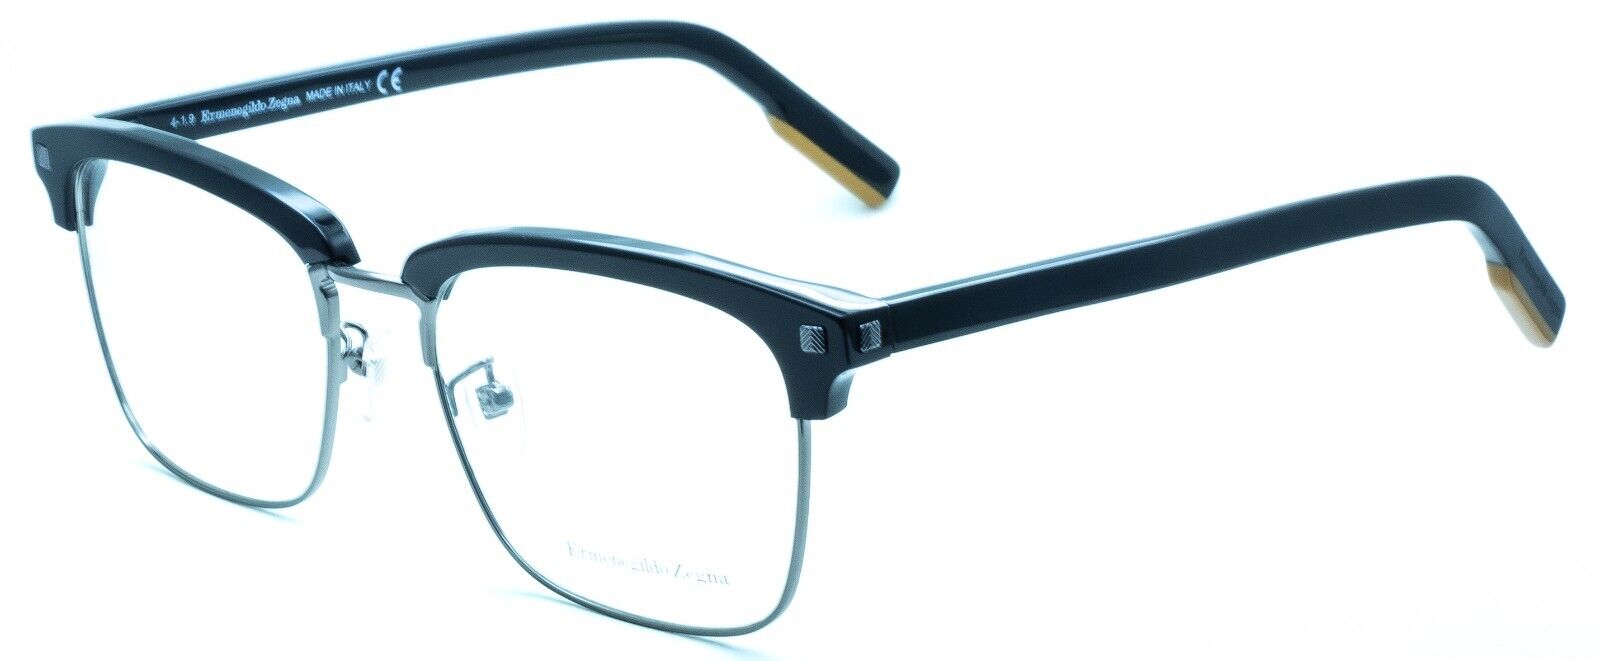 Chanel 2042 Vintage Eyeglasses for Men NOS Made in Italy 